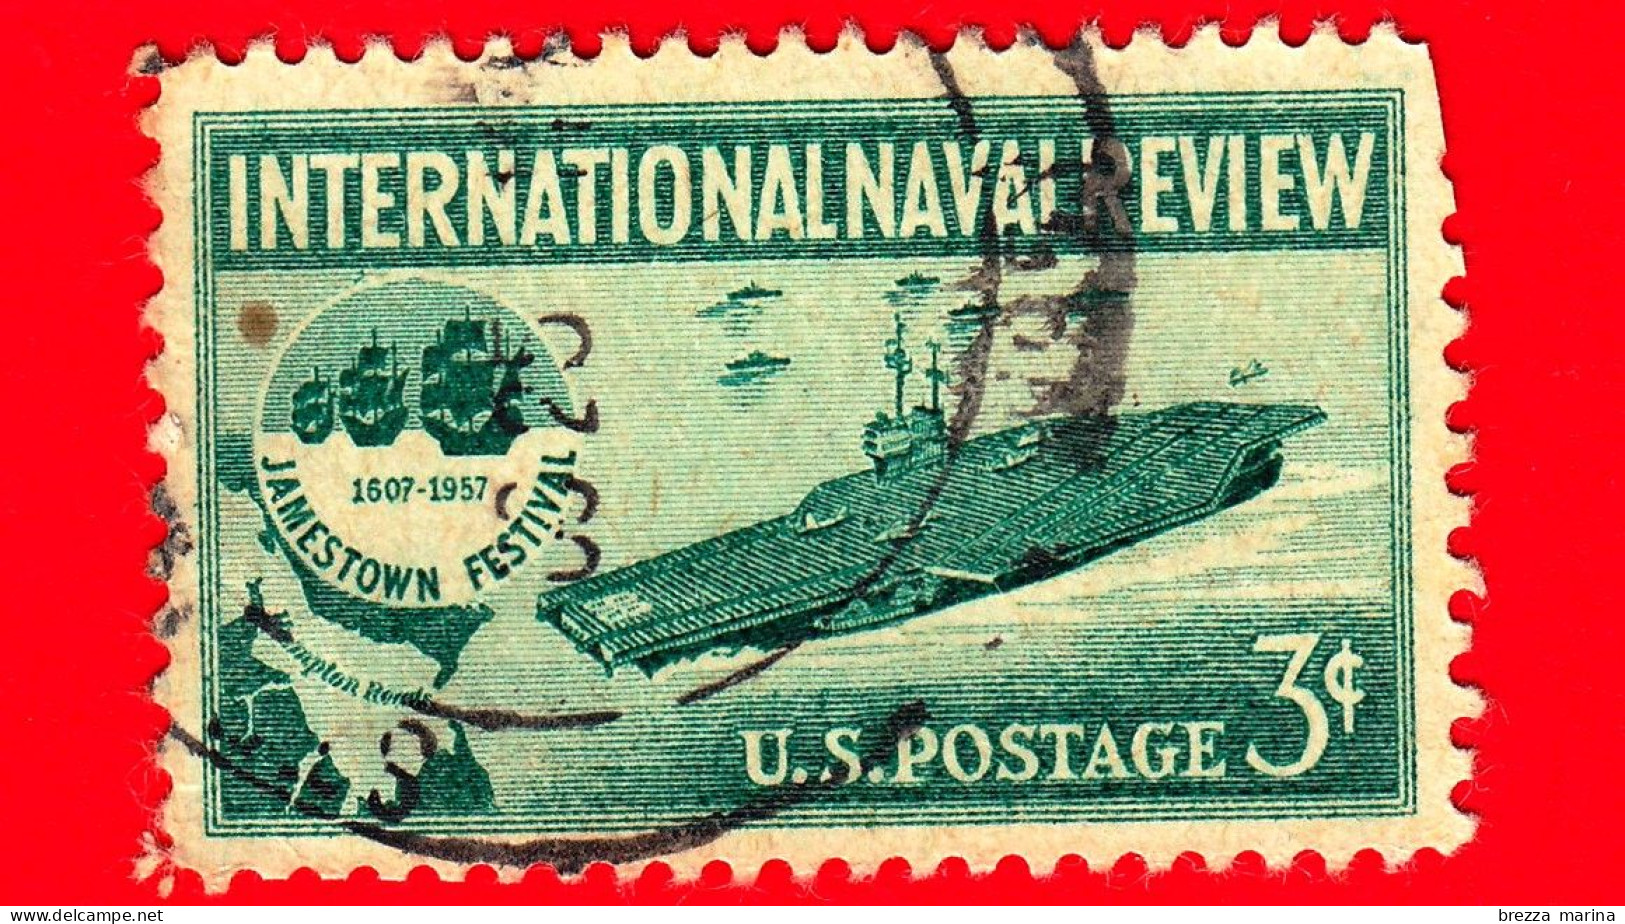 USA - STATI UNITI - Usato - 1957 - Rassegna Navale Internazionale - Portaerei Ed Emblema Del Jamestown Festival - 3 - Usados